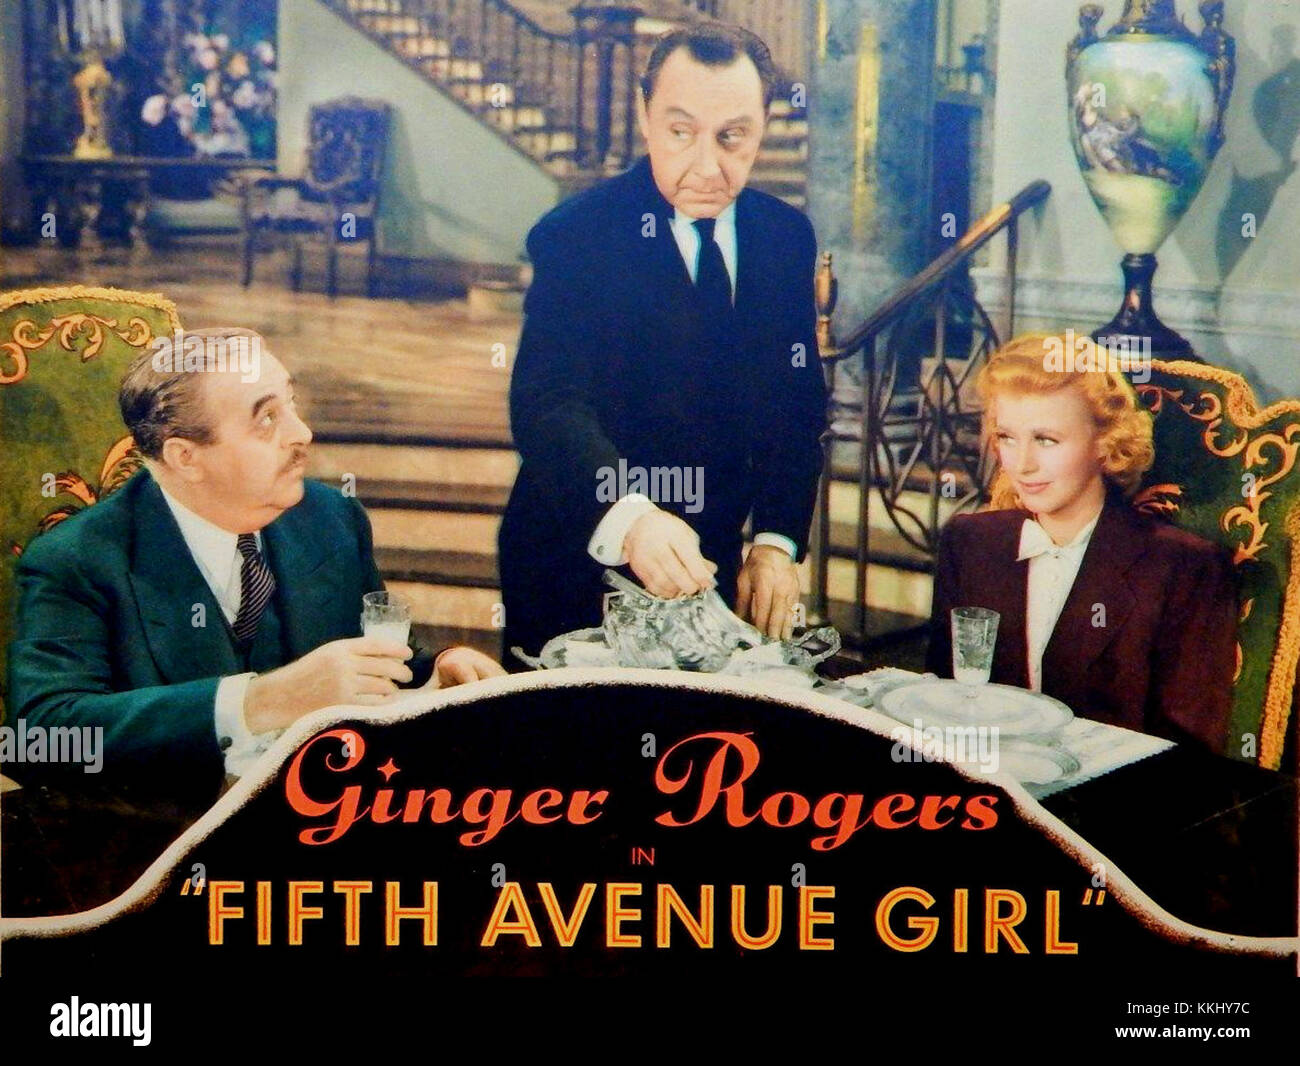 Fifth Avenue Girl lobby card Stock Photo - Alamy